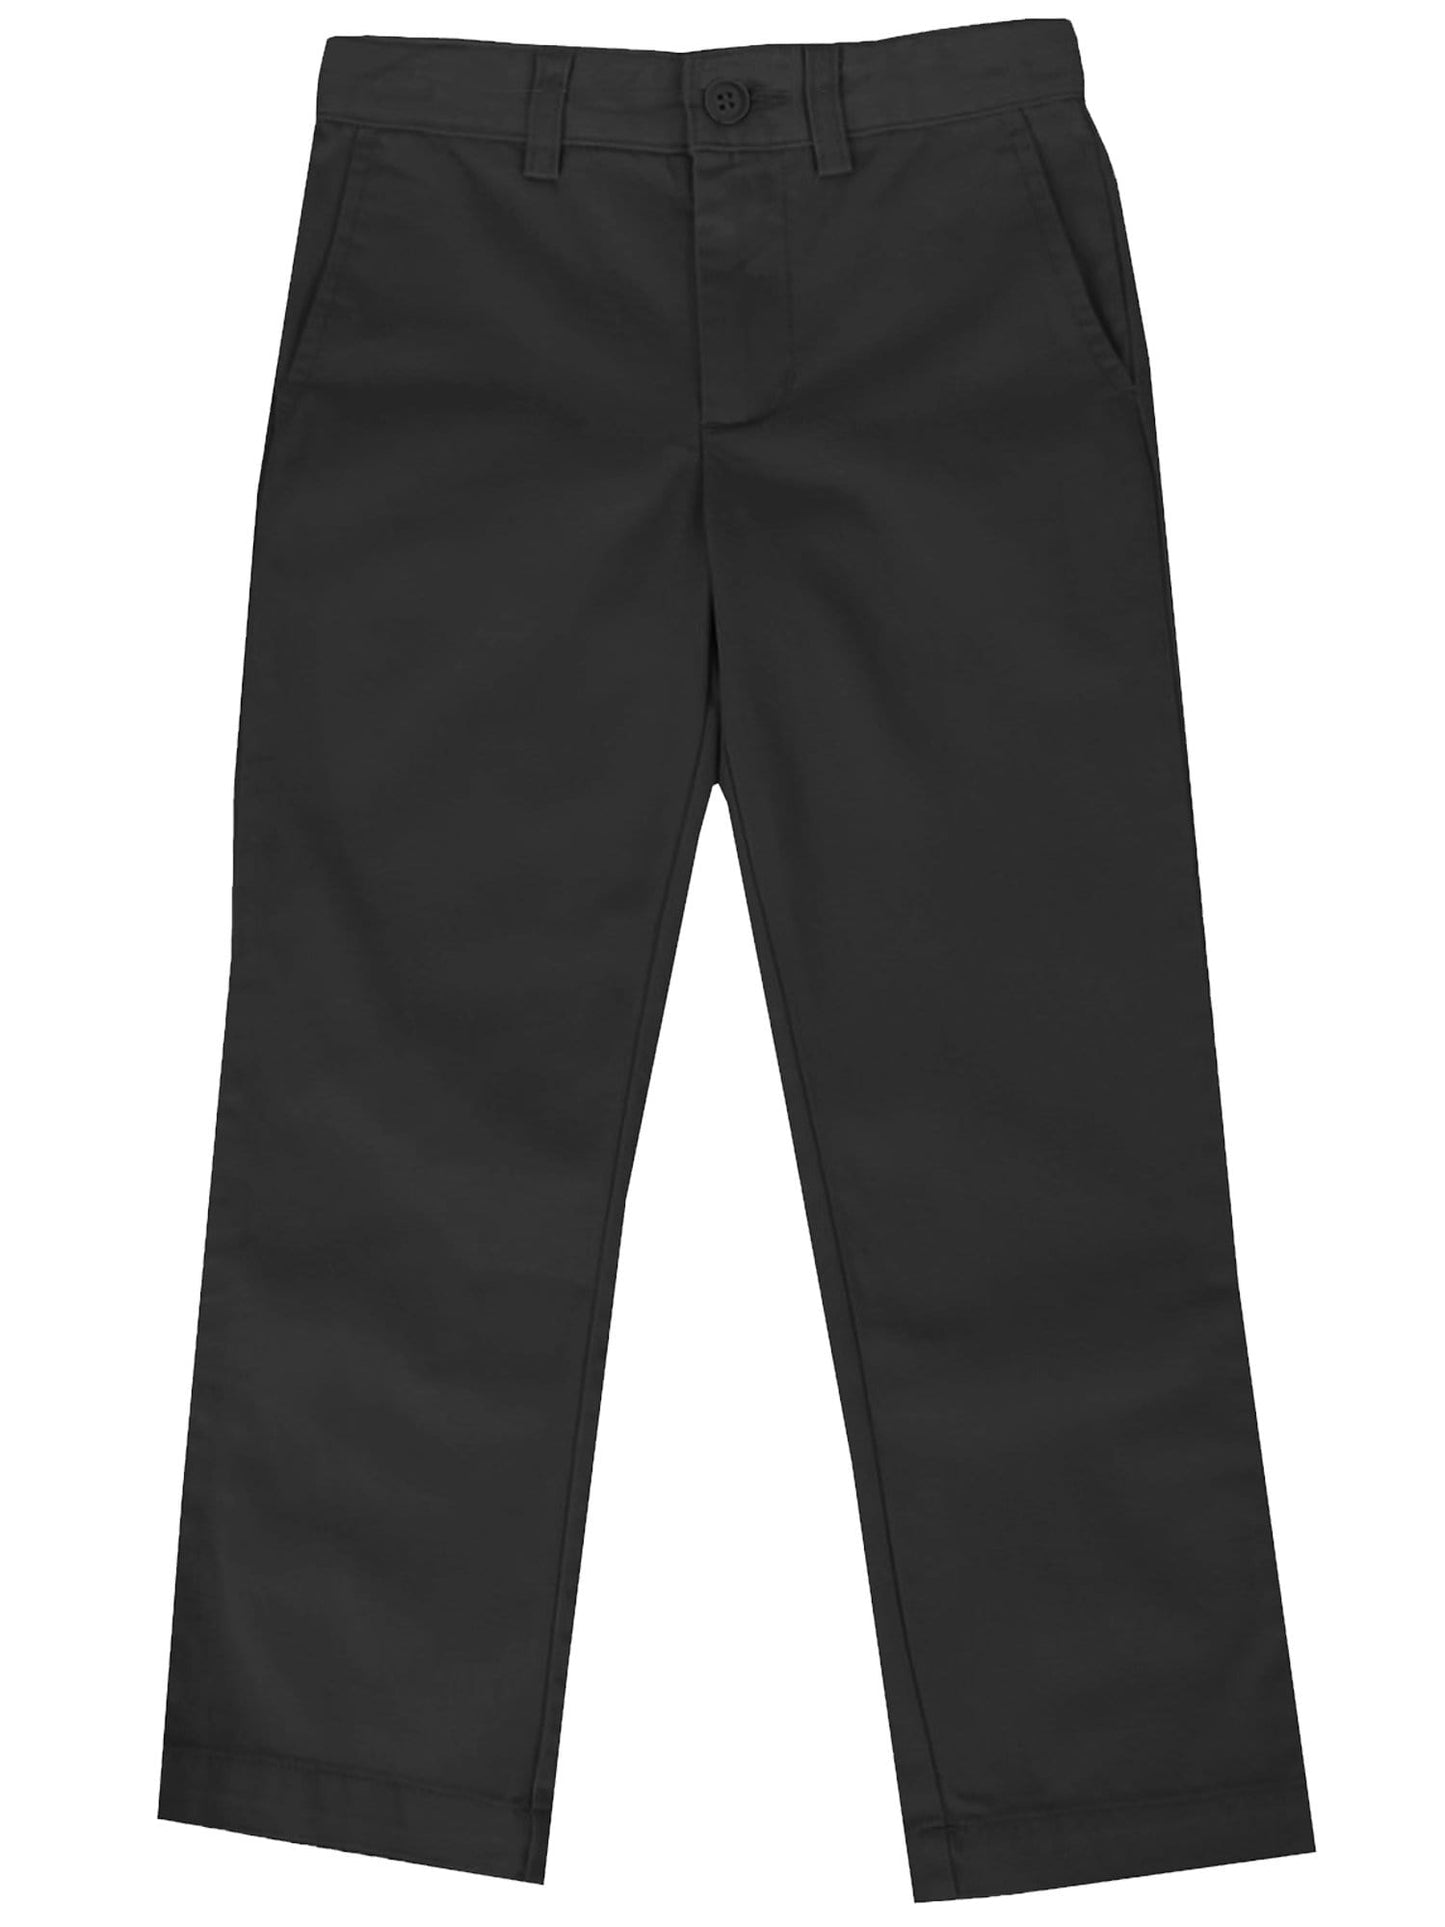 Boys Classic Flat Front School Uniform Pants - Sizes 4-20